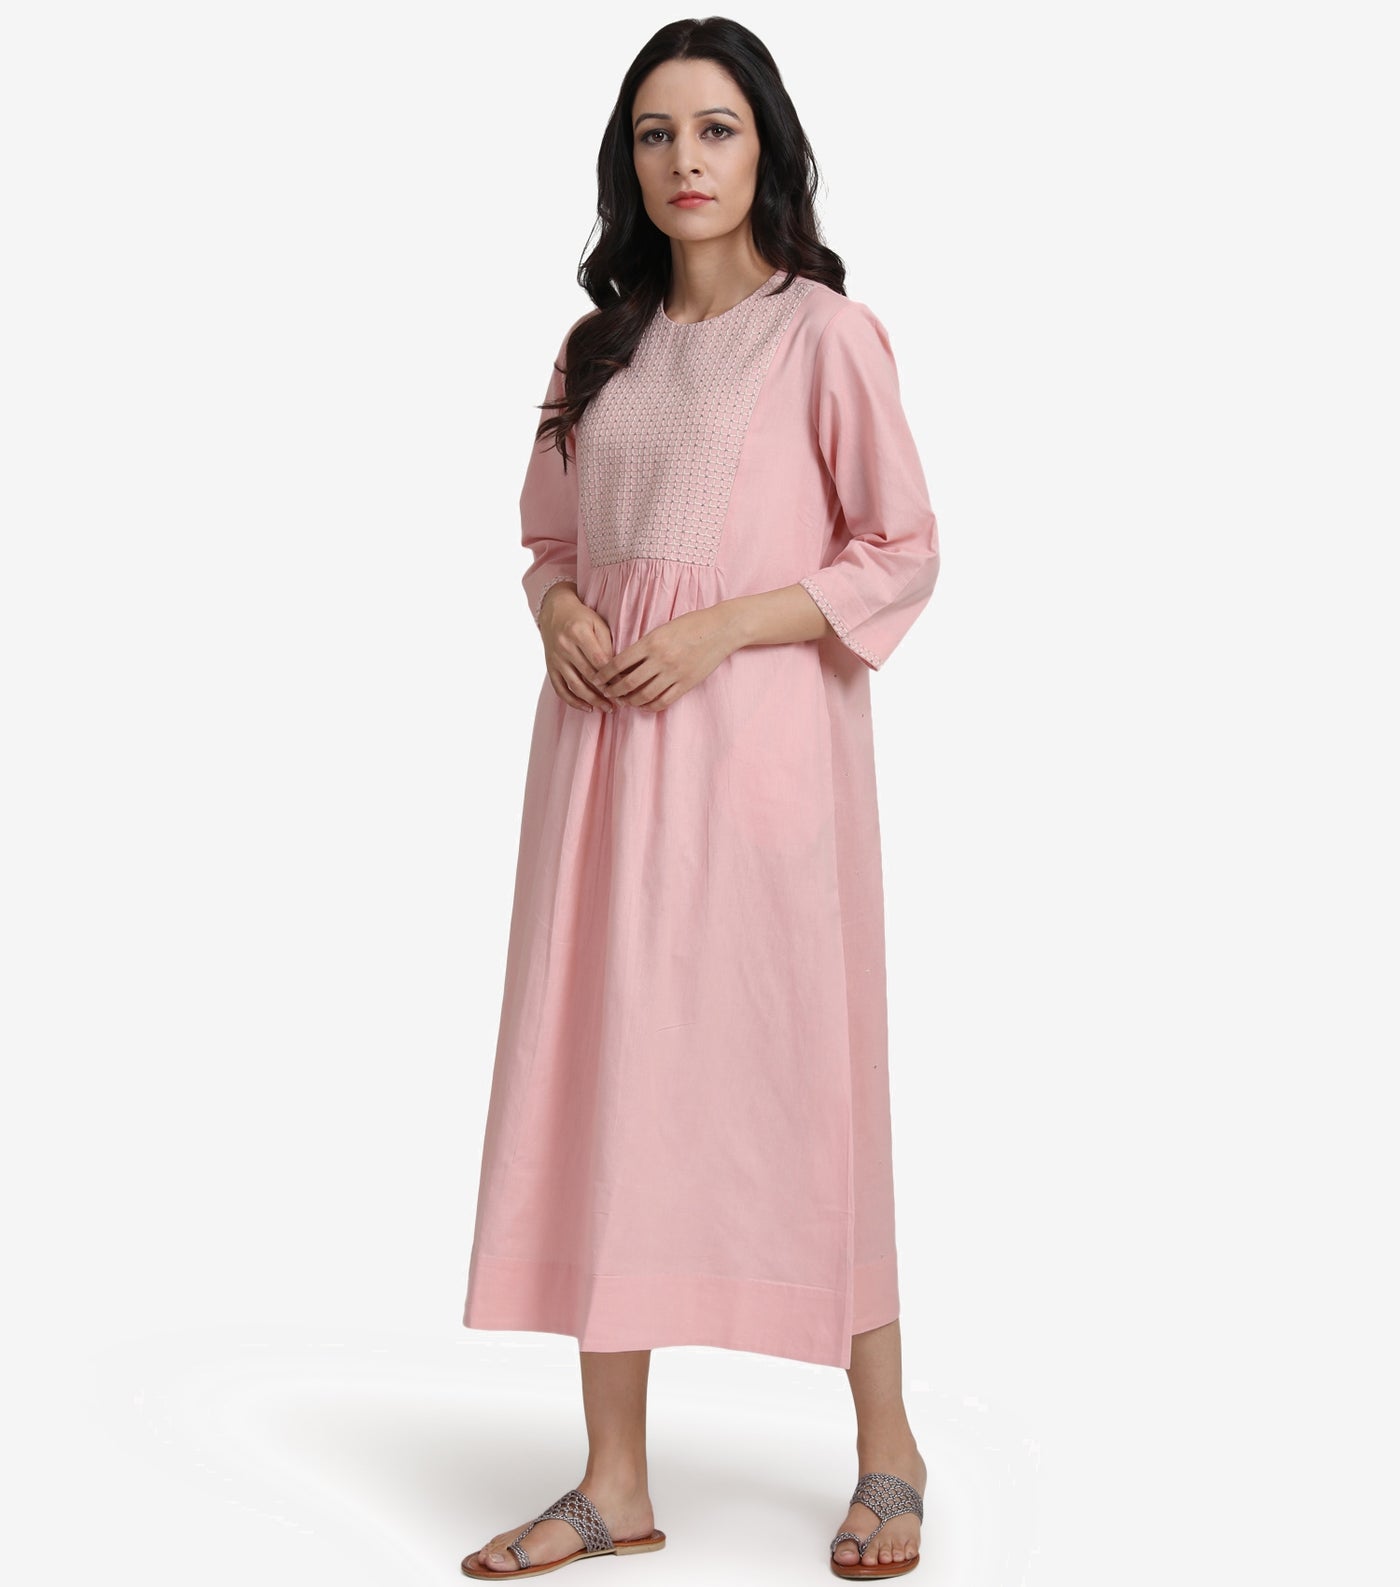 Pastel pink cotton linen Dress